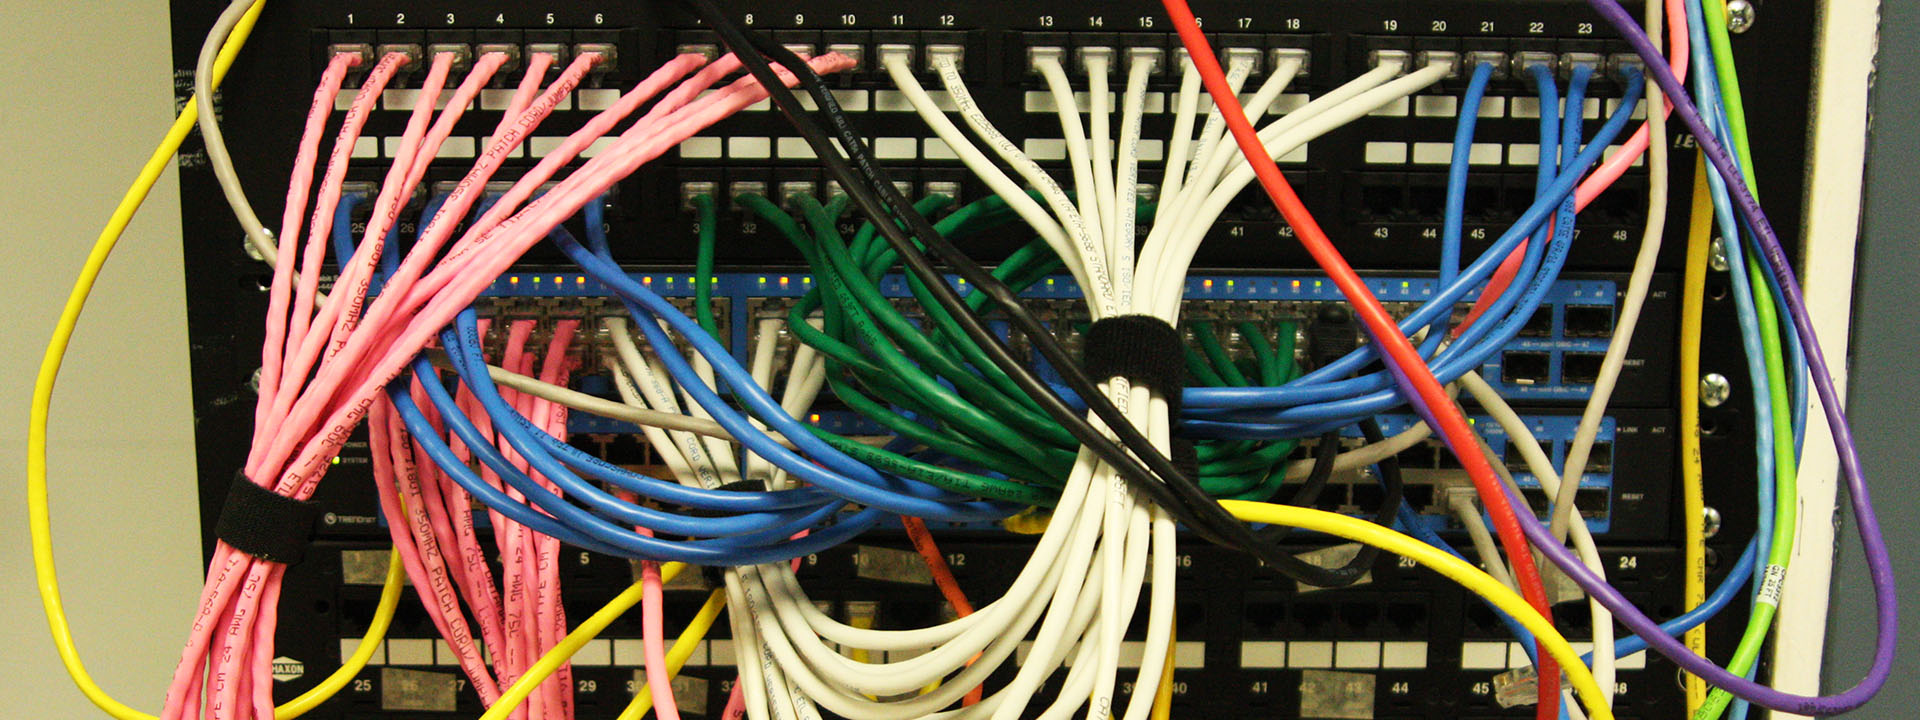 Network cables bundled